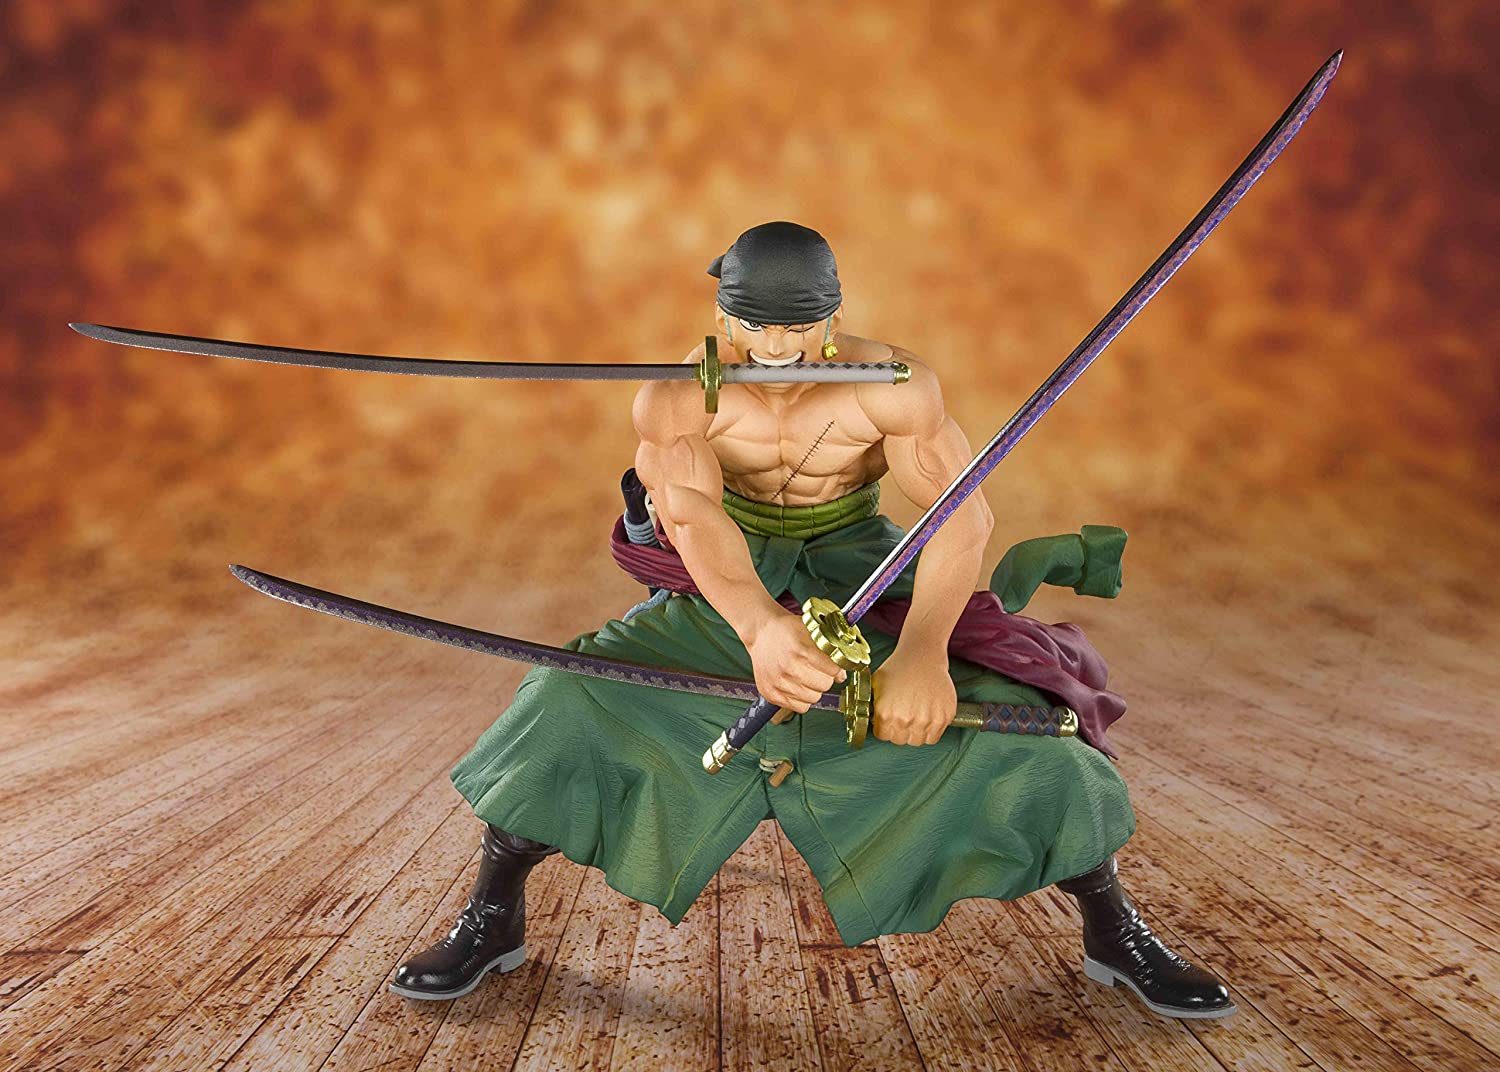 Action Figure Review: One Piece S.H. Figuarts Roronoa Zoro